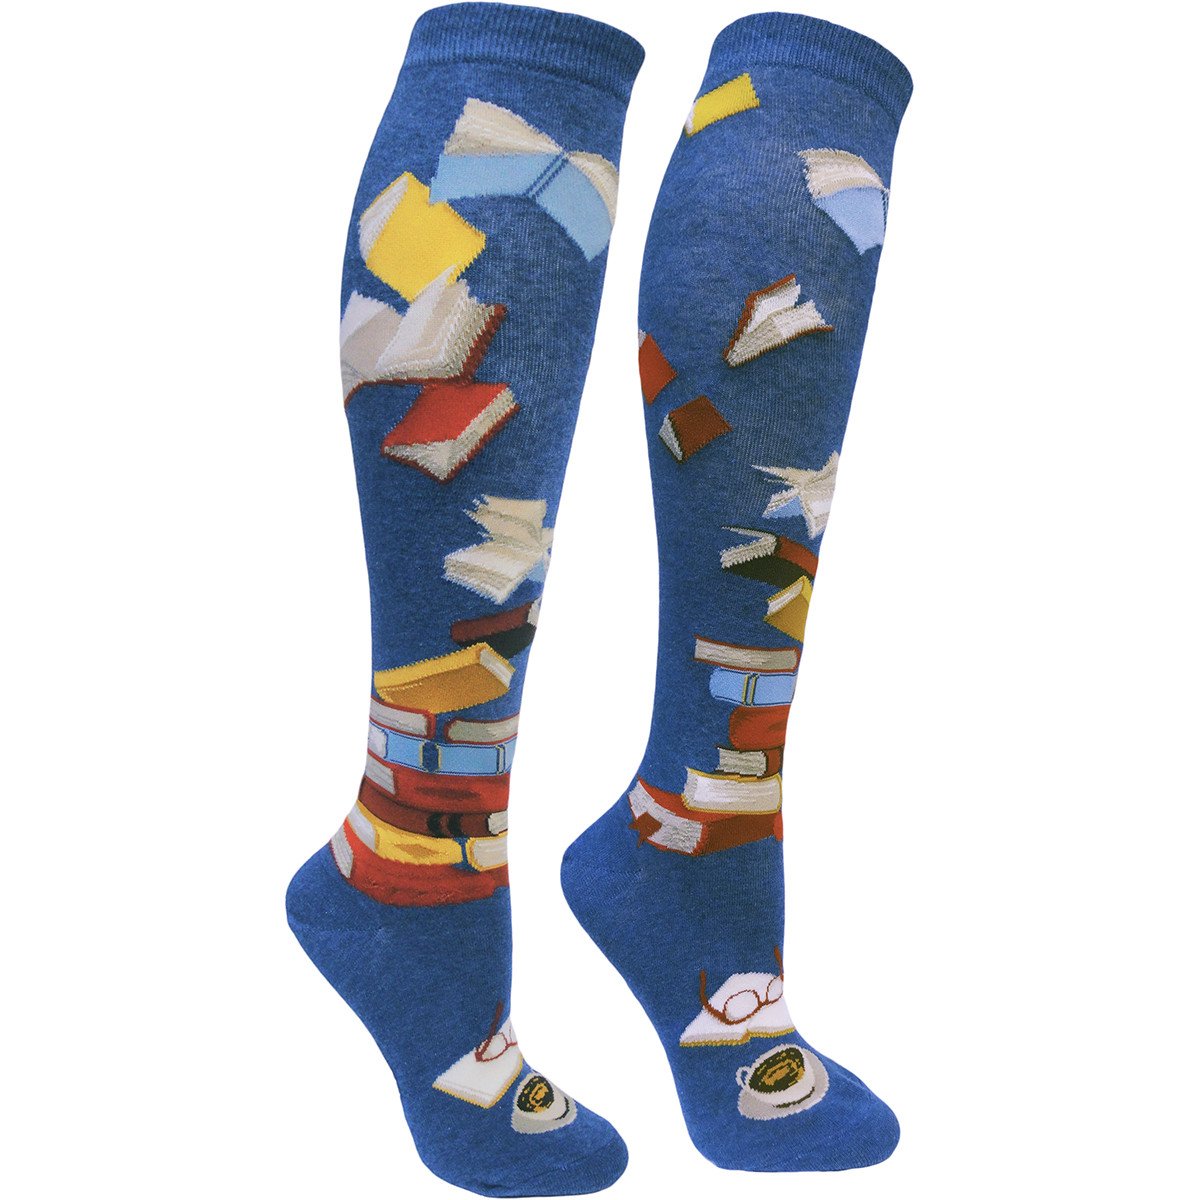 Bibliophile Knee High Socks in Blue